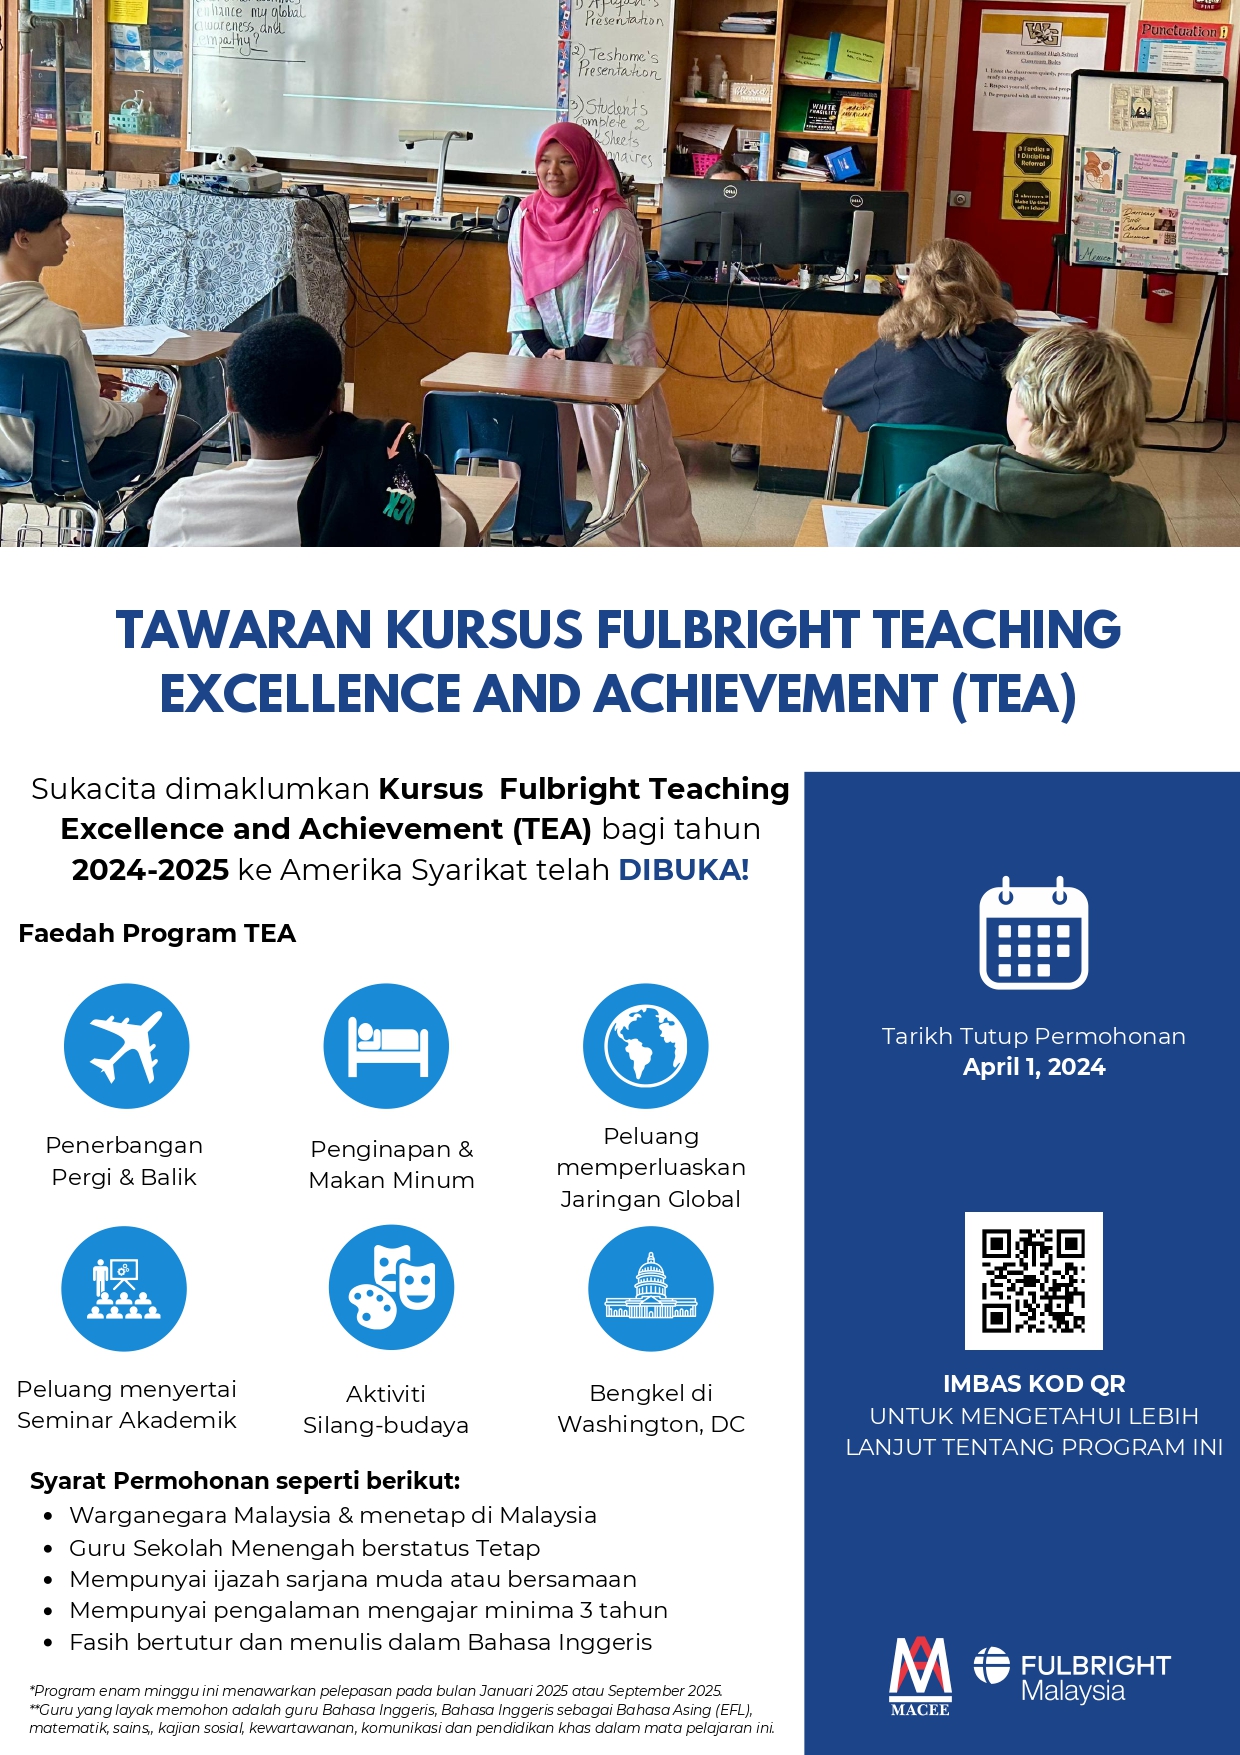 Tawaran Kursus Fulbright Excellence and Achievement (TEA) BM